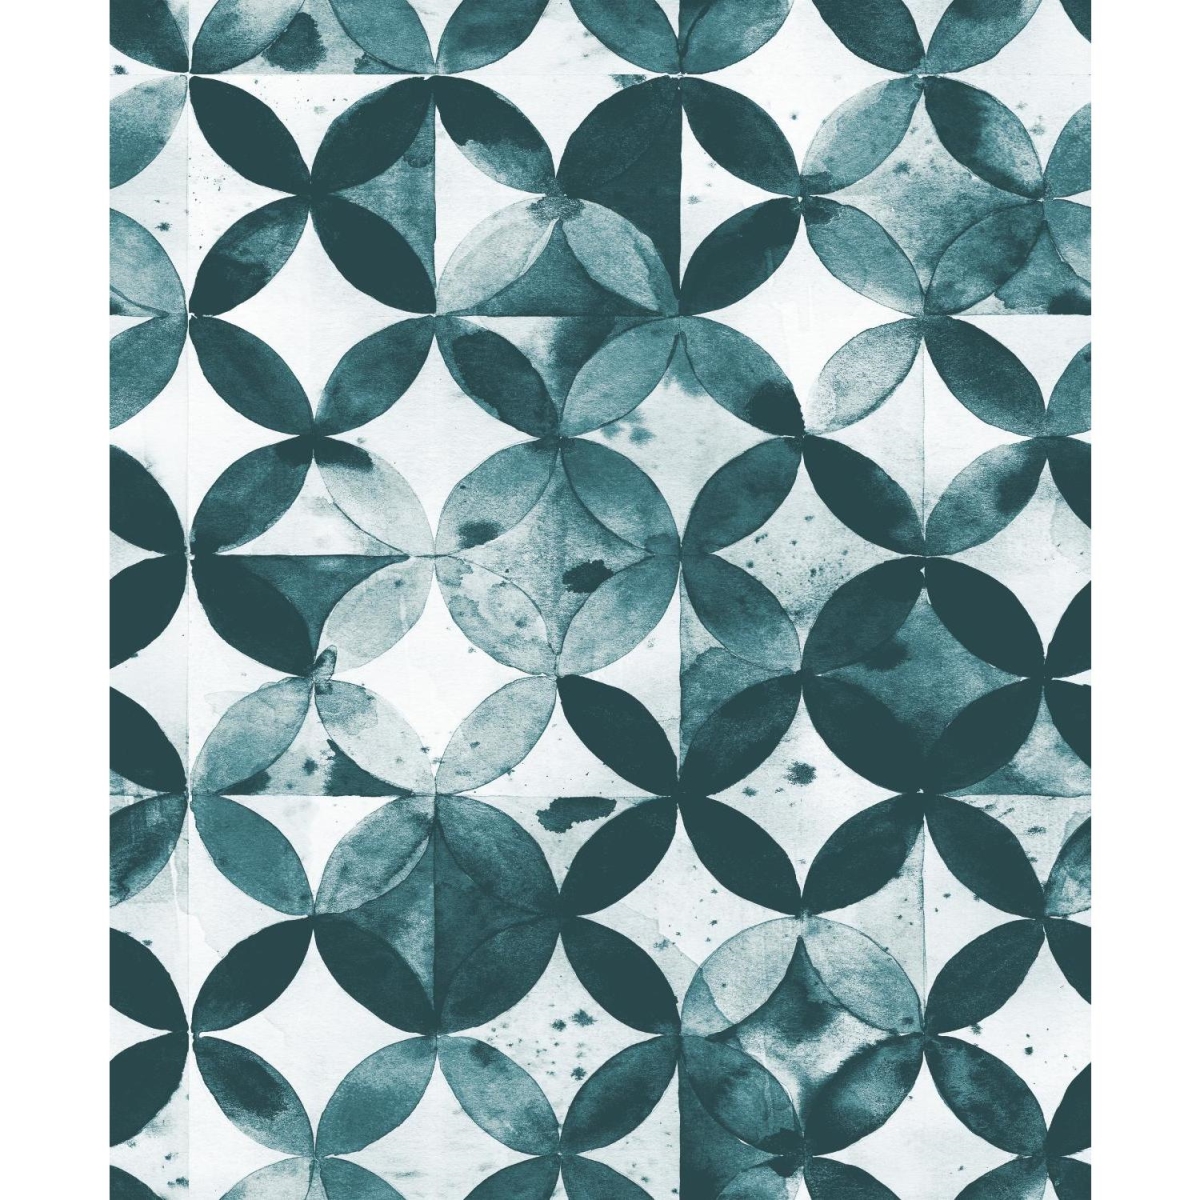 Rmk11355rl Paul Brent Moroccan Tile Peel & Stick Wallpaper, Green